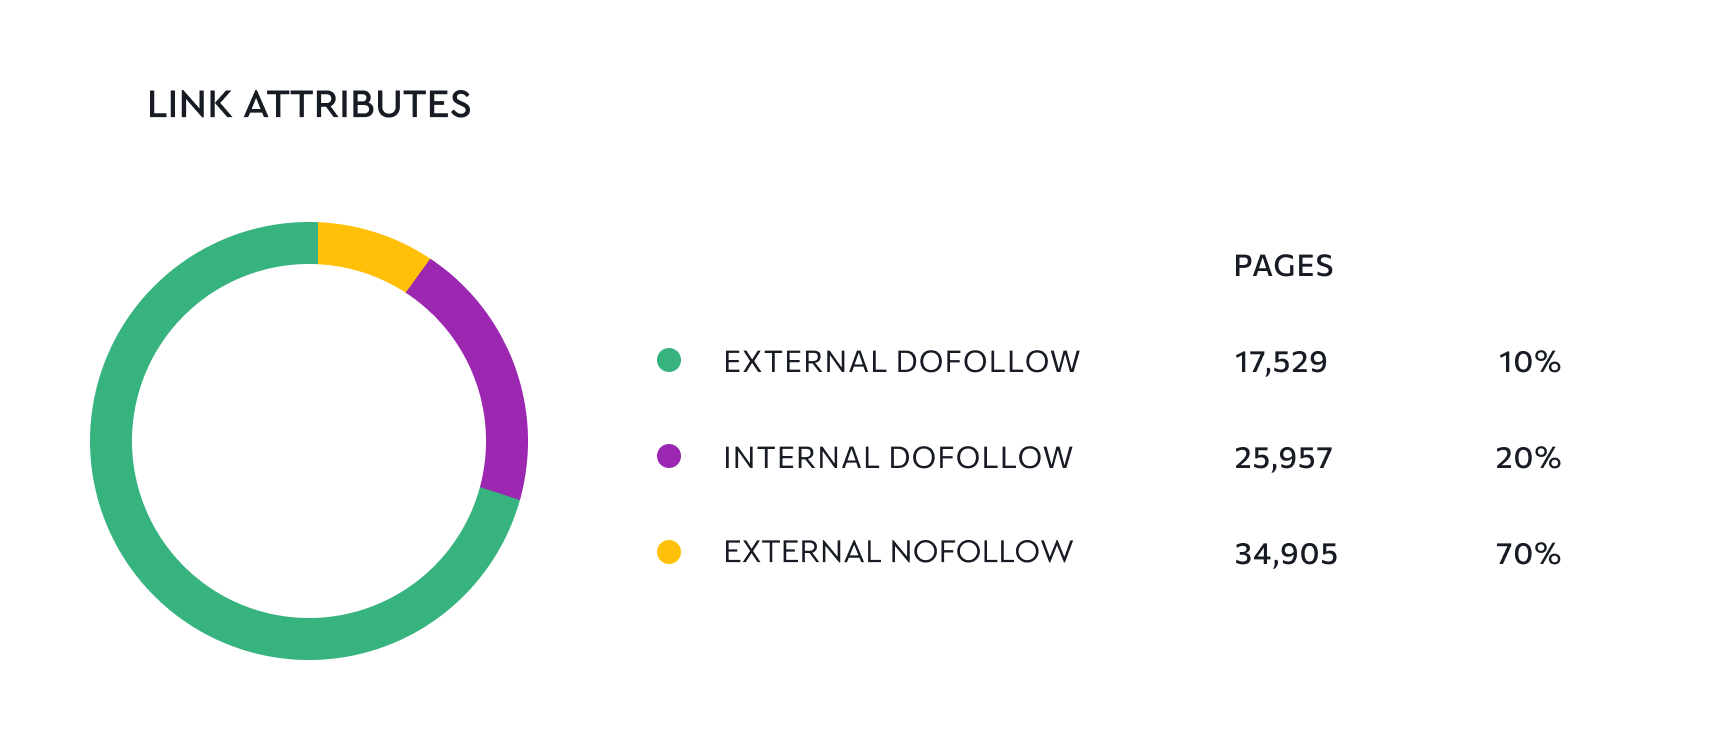 Link attributes distribution